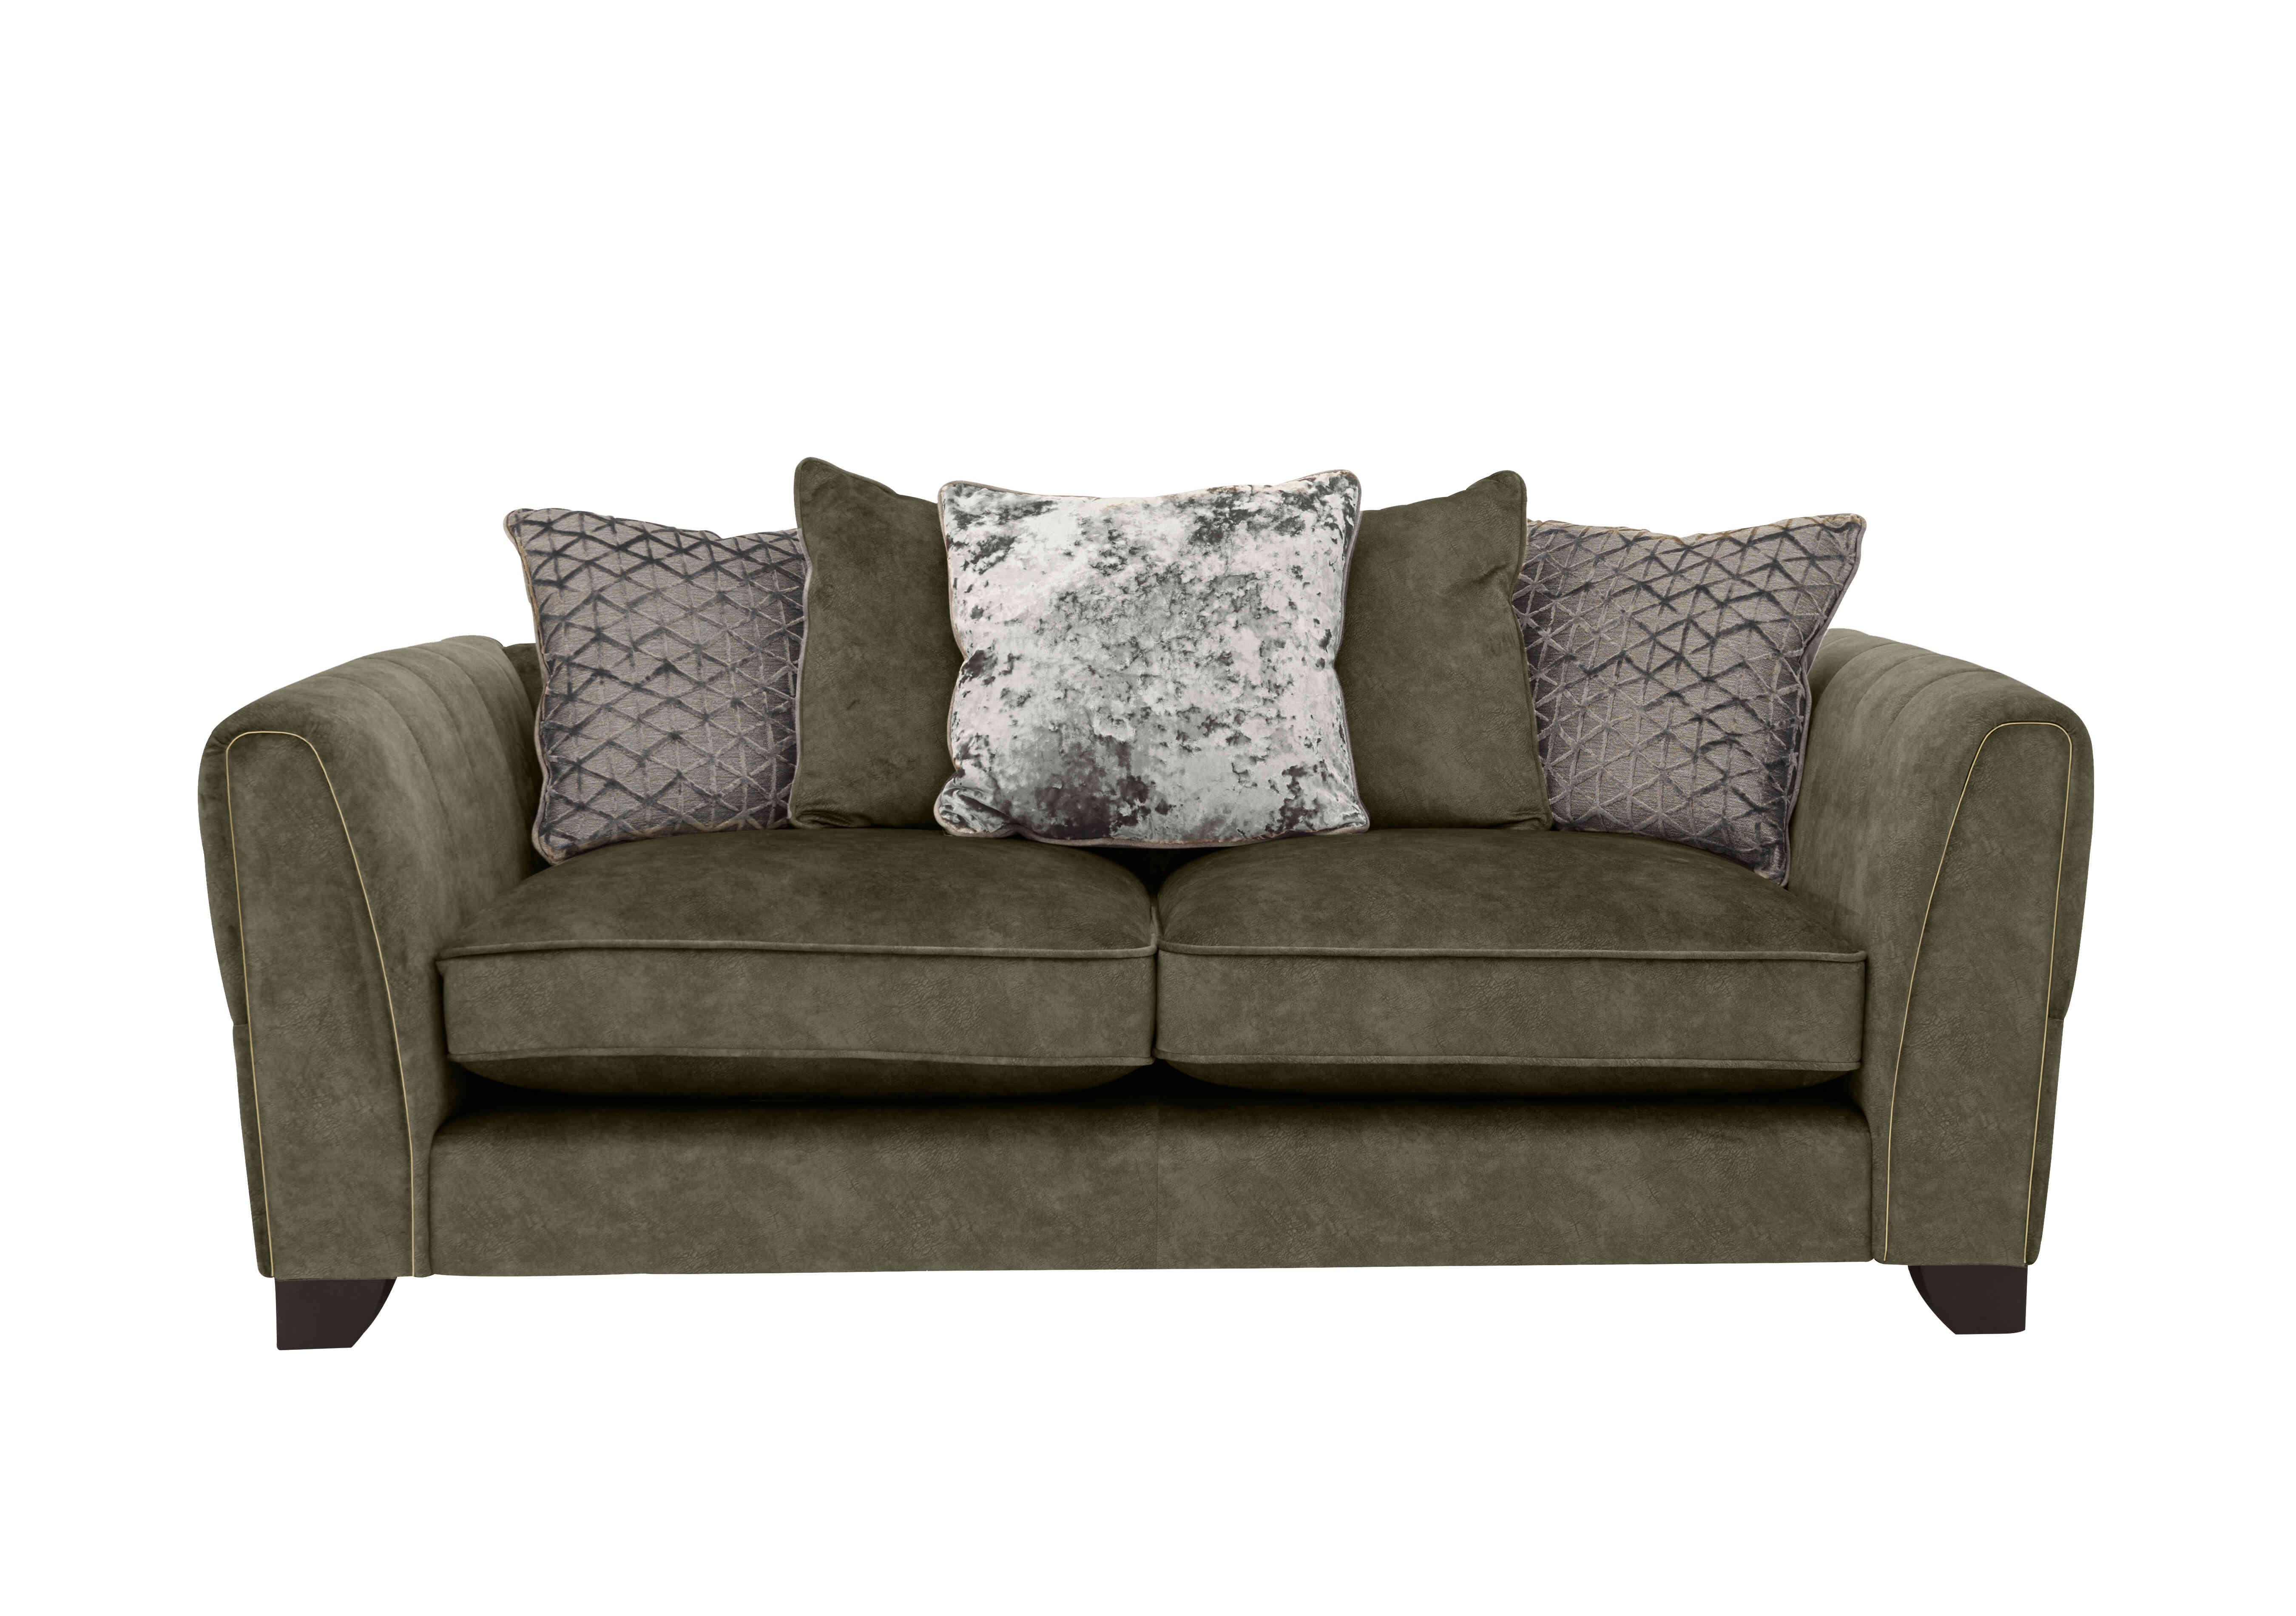 Ariana 3 Seater Fabric Pillow Back Sofa in Dapple Sage Brass Insert on Furniture Village